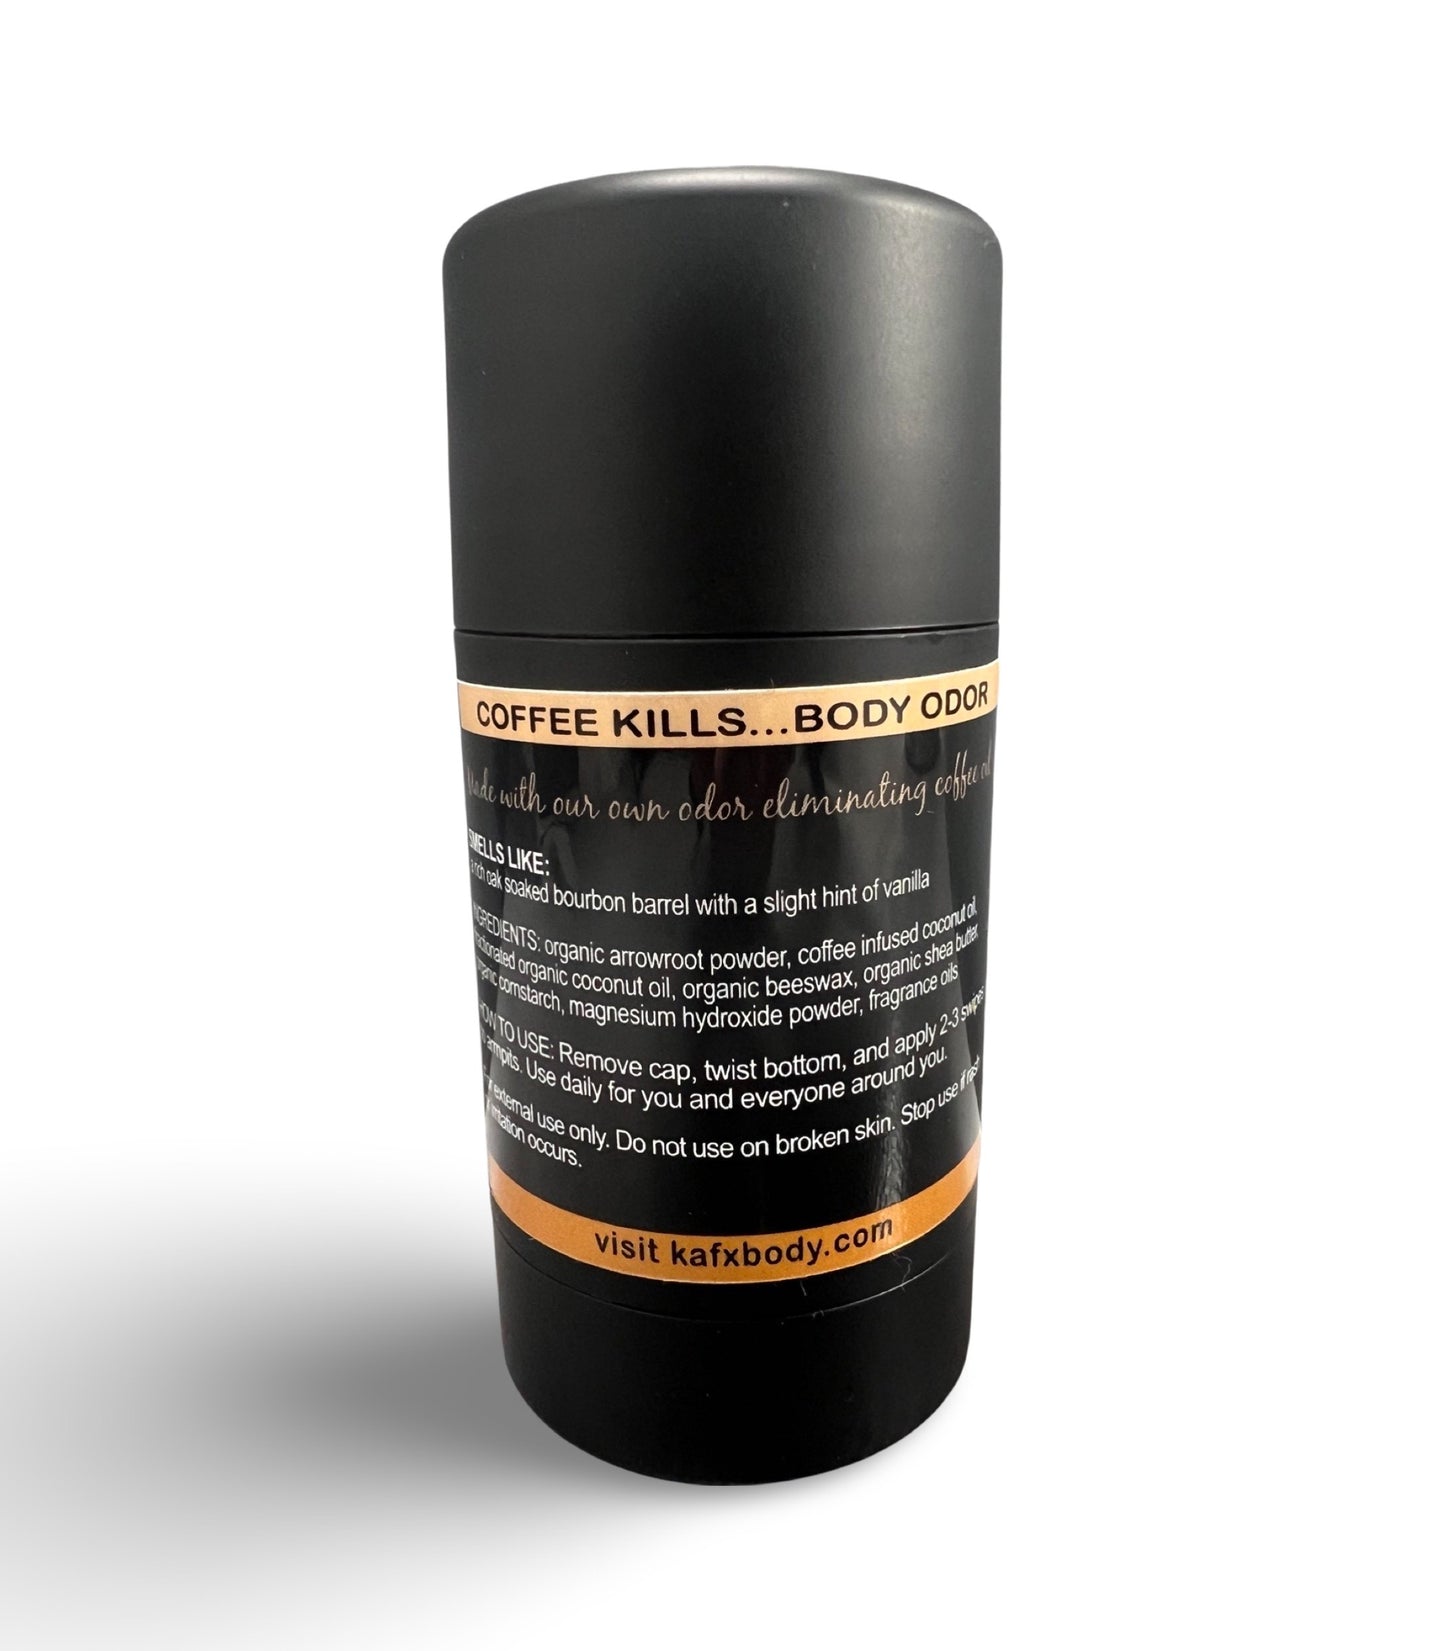 Oak Barrel Bourbon KAFX Body Natural Coffee Infused Deodorant